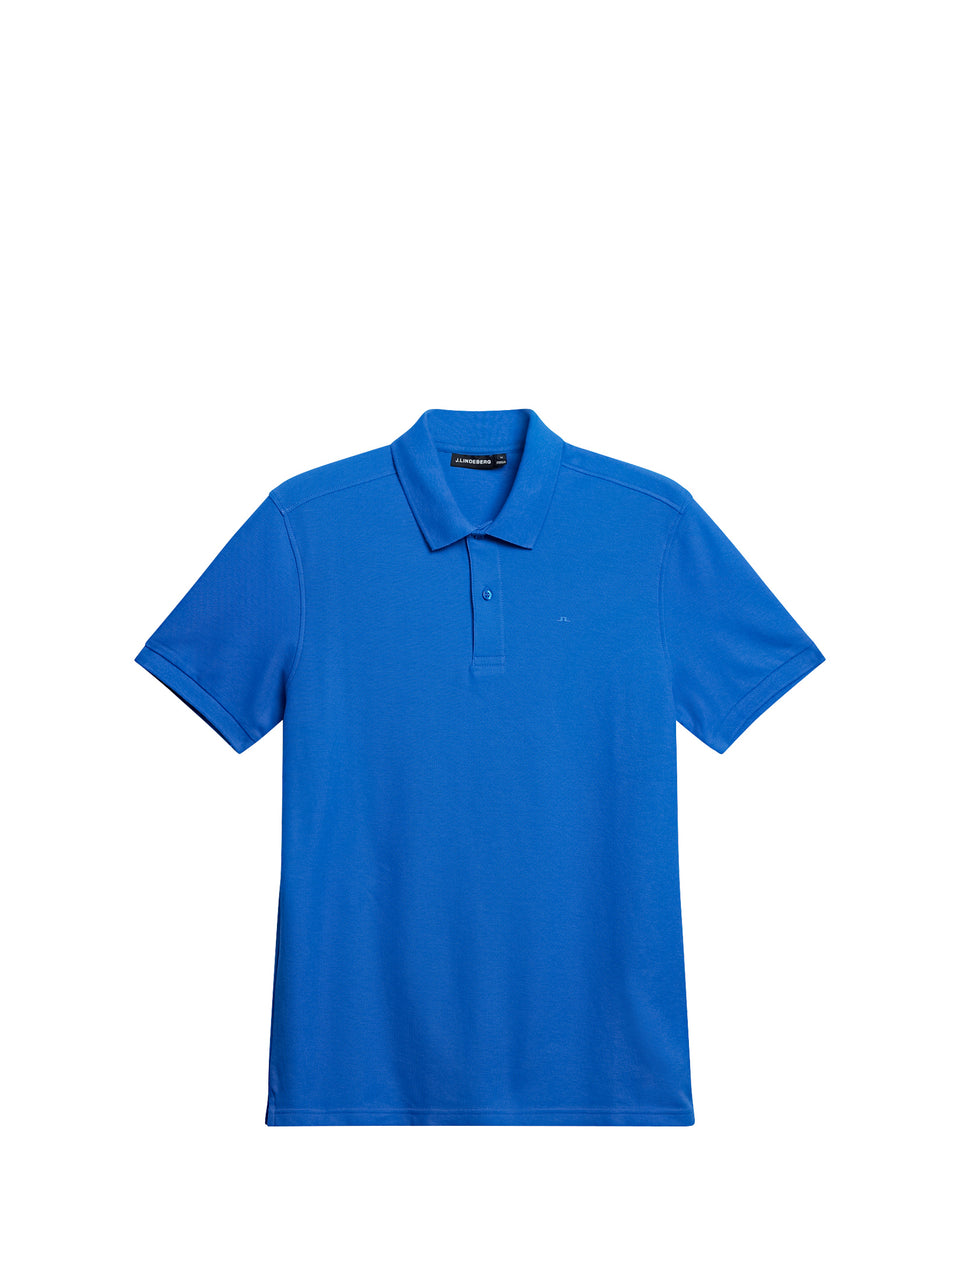 Troy Polo shirt / Lapis Blue